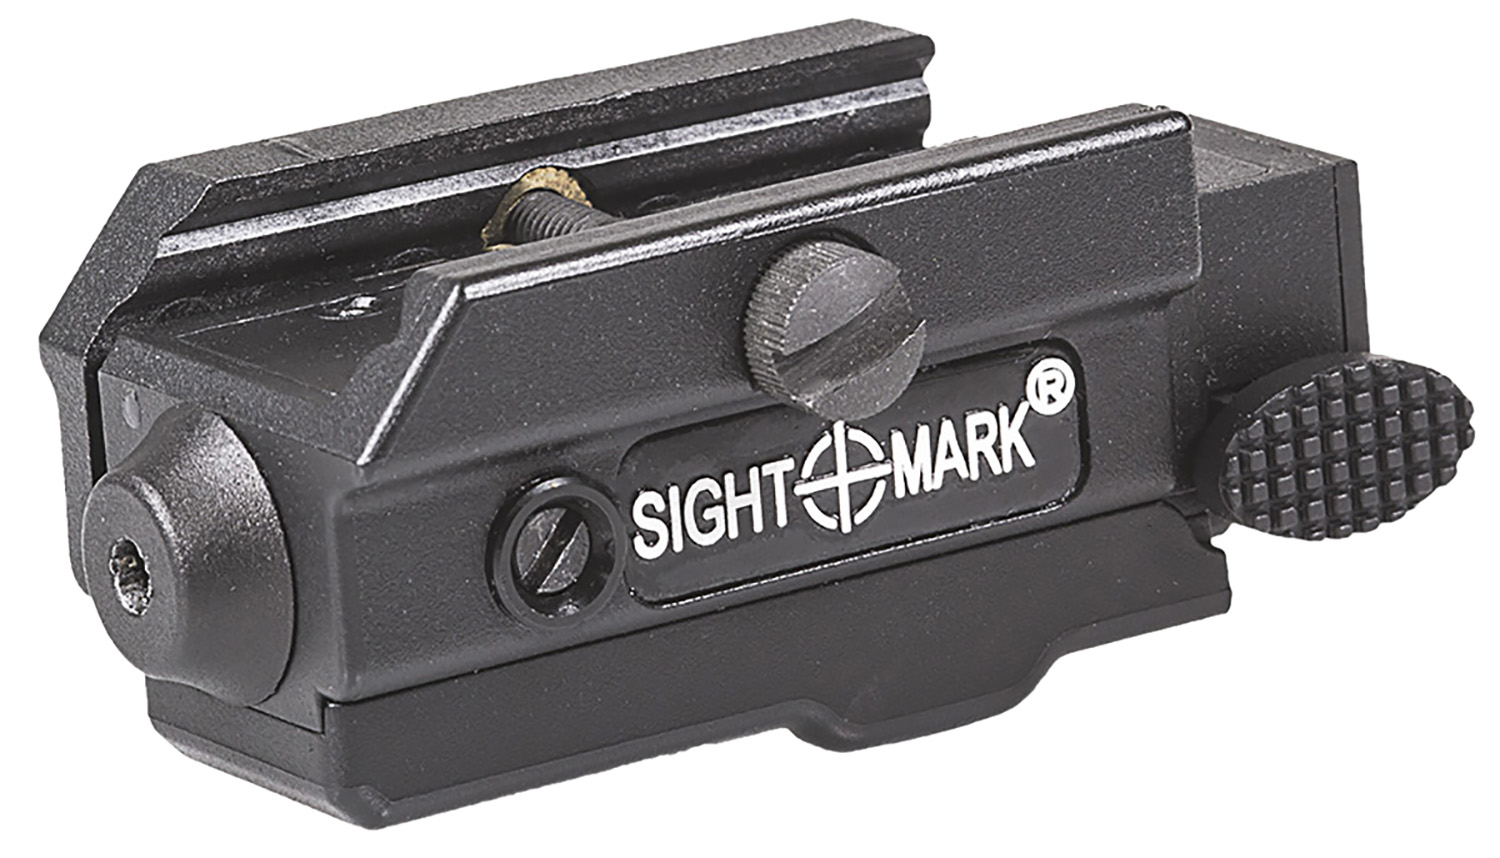 Sightmark SM25007 ReadyFire LW-R5 5mW Red Laser 632-650nM Wavelength (20yds Day/300yds Night Range) Matte Black Finish